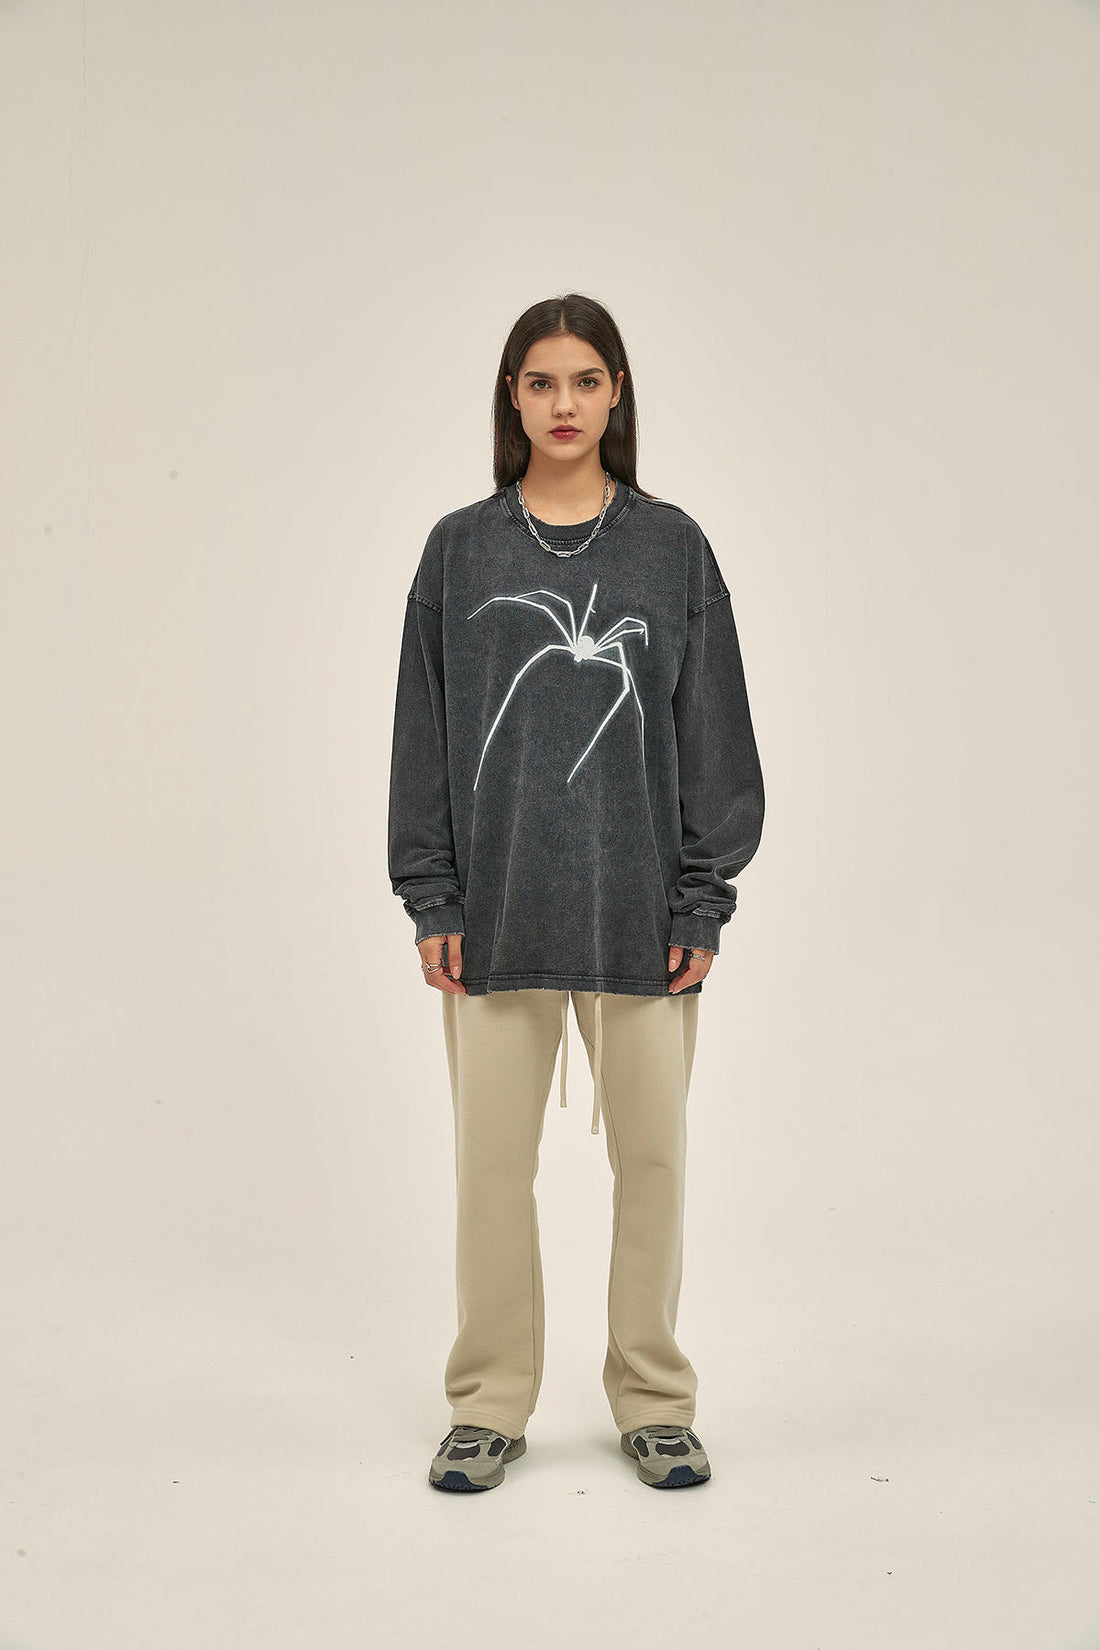 250G Washed Spider Print Women Long-Sleeved Sweatshirt